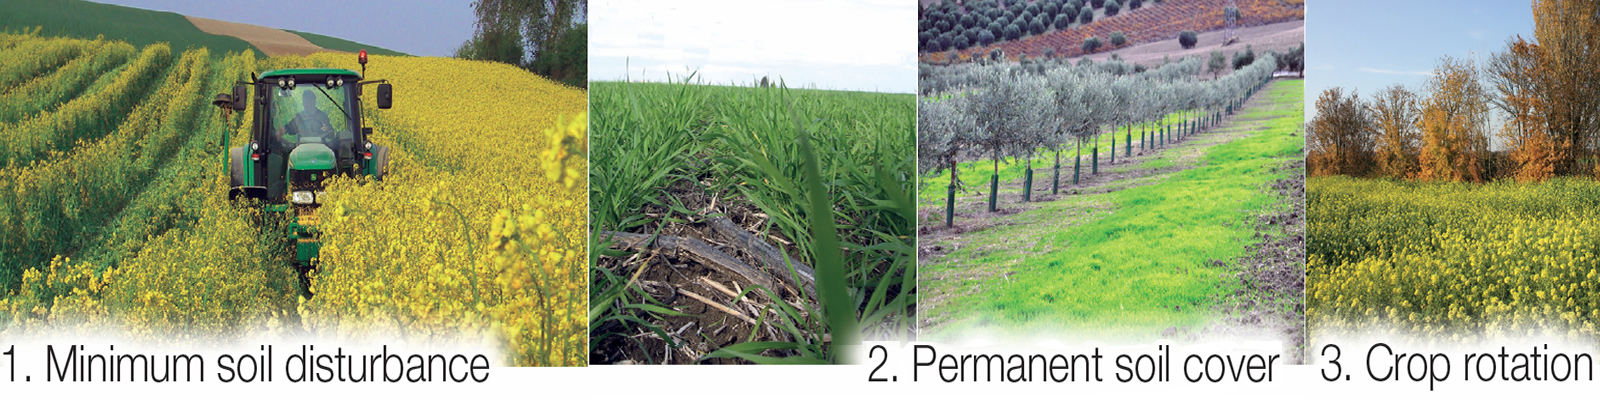 Minimum soil disturbance, permanent soil cover, crop rotation